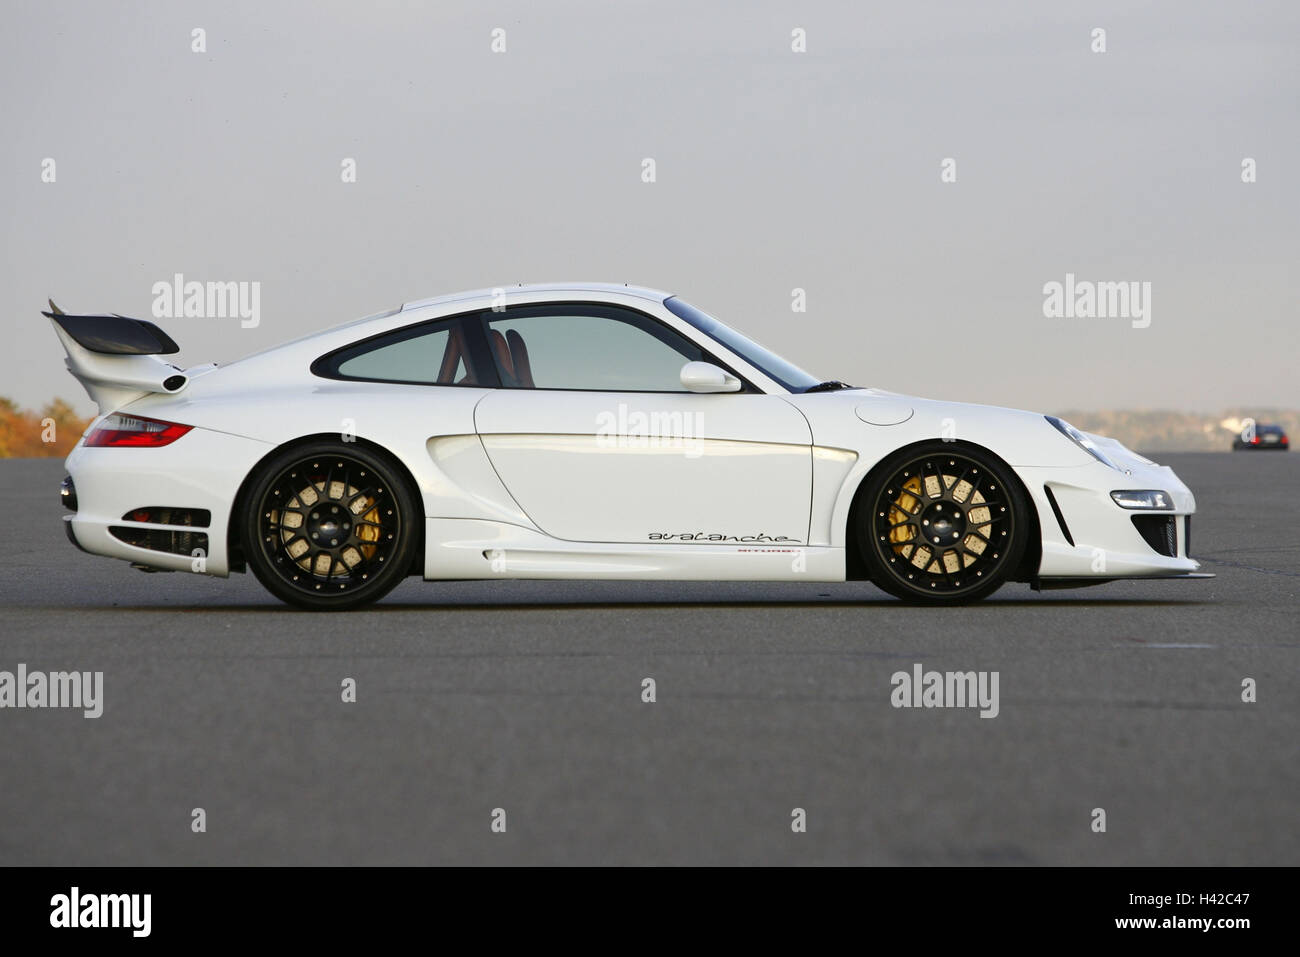 Porsche, Gemballa Avalanche, no property release, Stock Photo